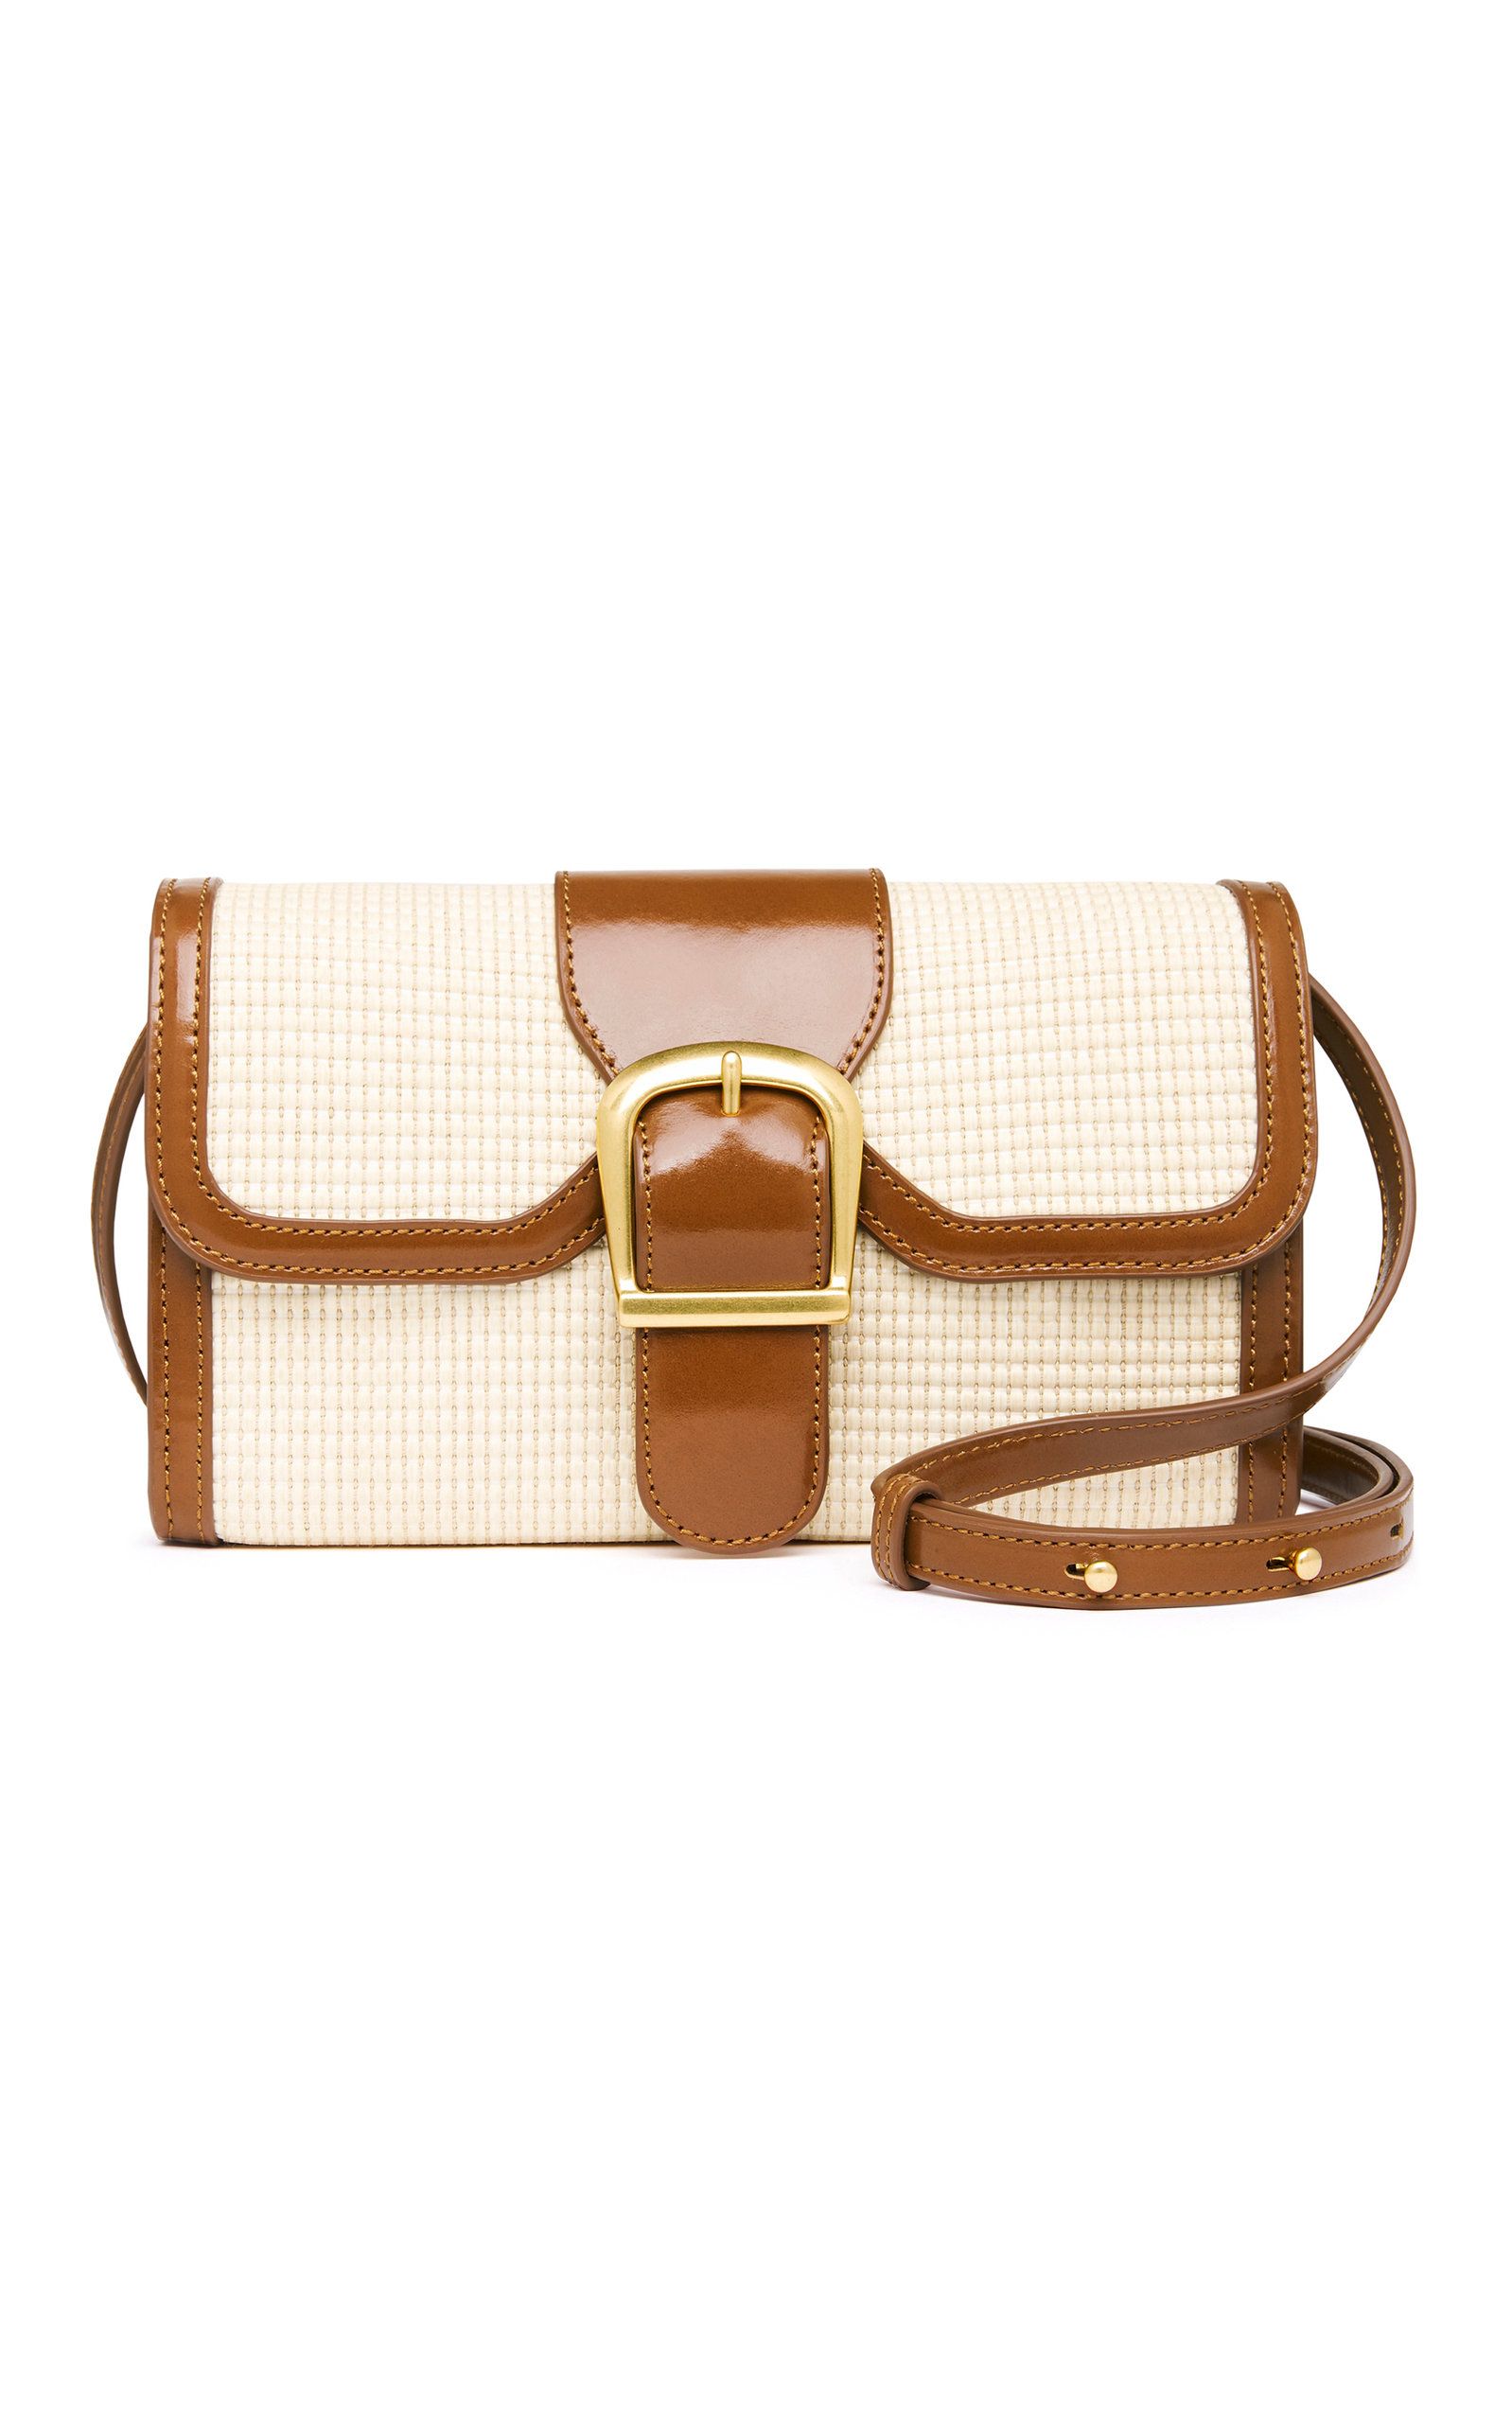 fashionable handbag top handbag oblique straddle bag Womens handbag wallet single shoulder bag 4-piece suit 